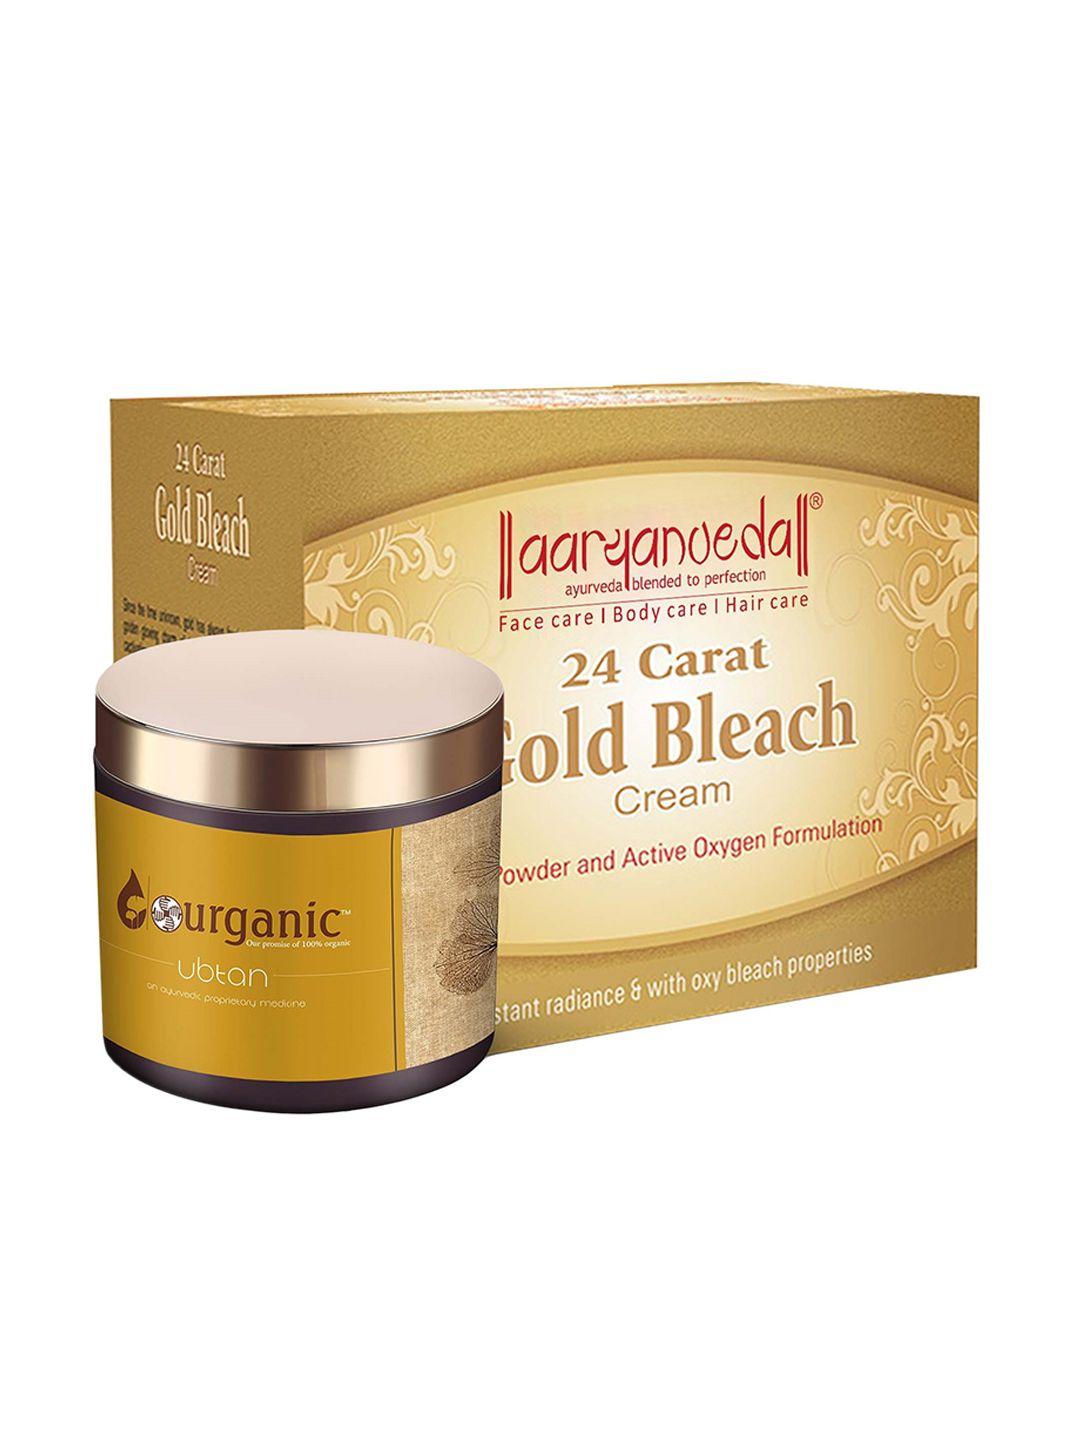 aryanveda set of 24 carat gold bleach cream & ubtan face mask